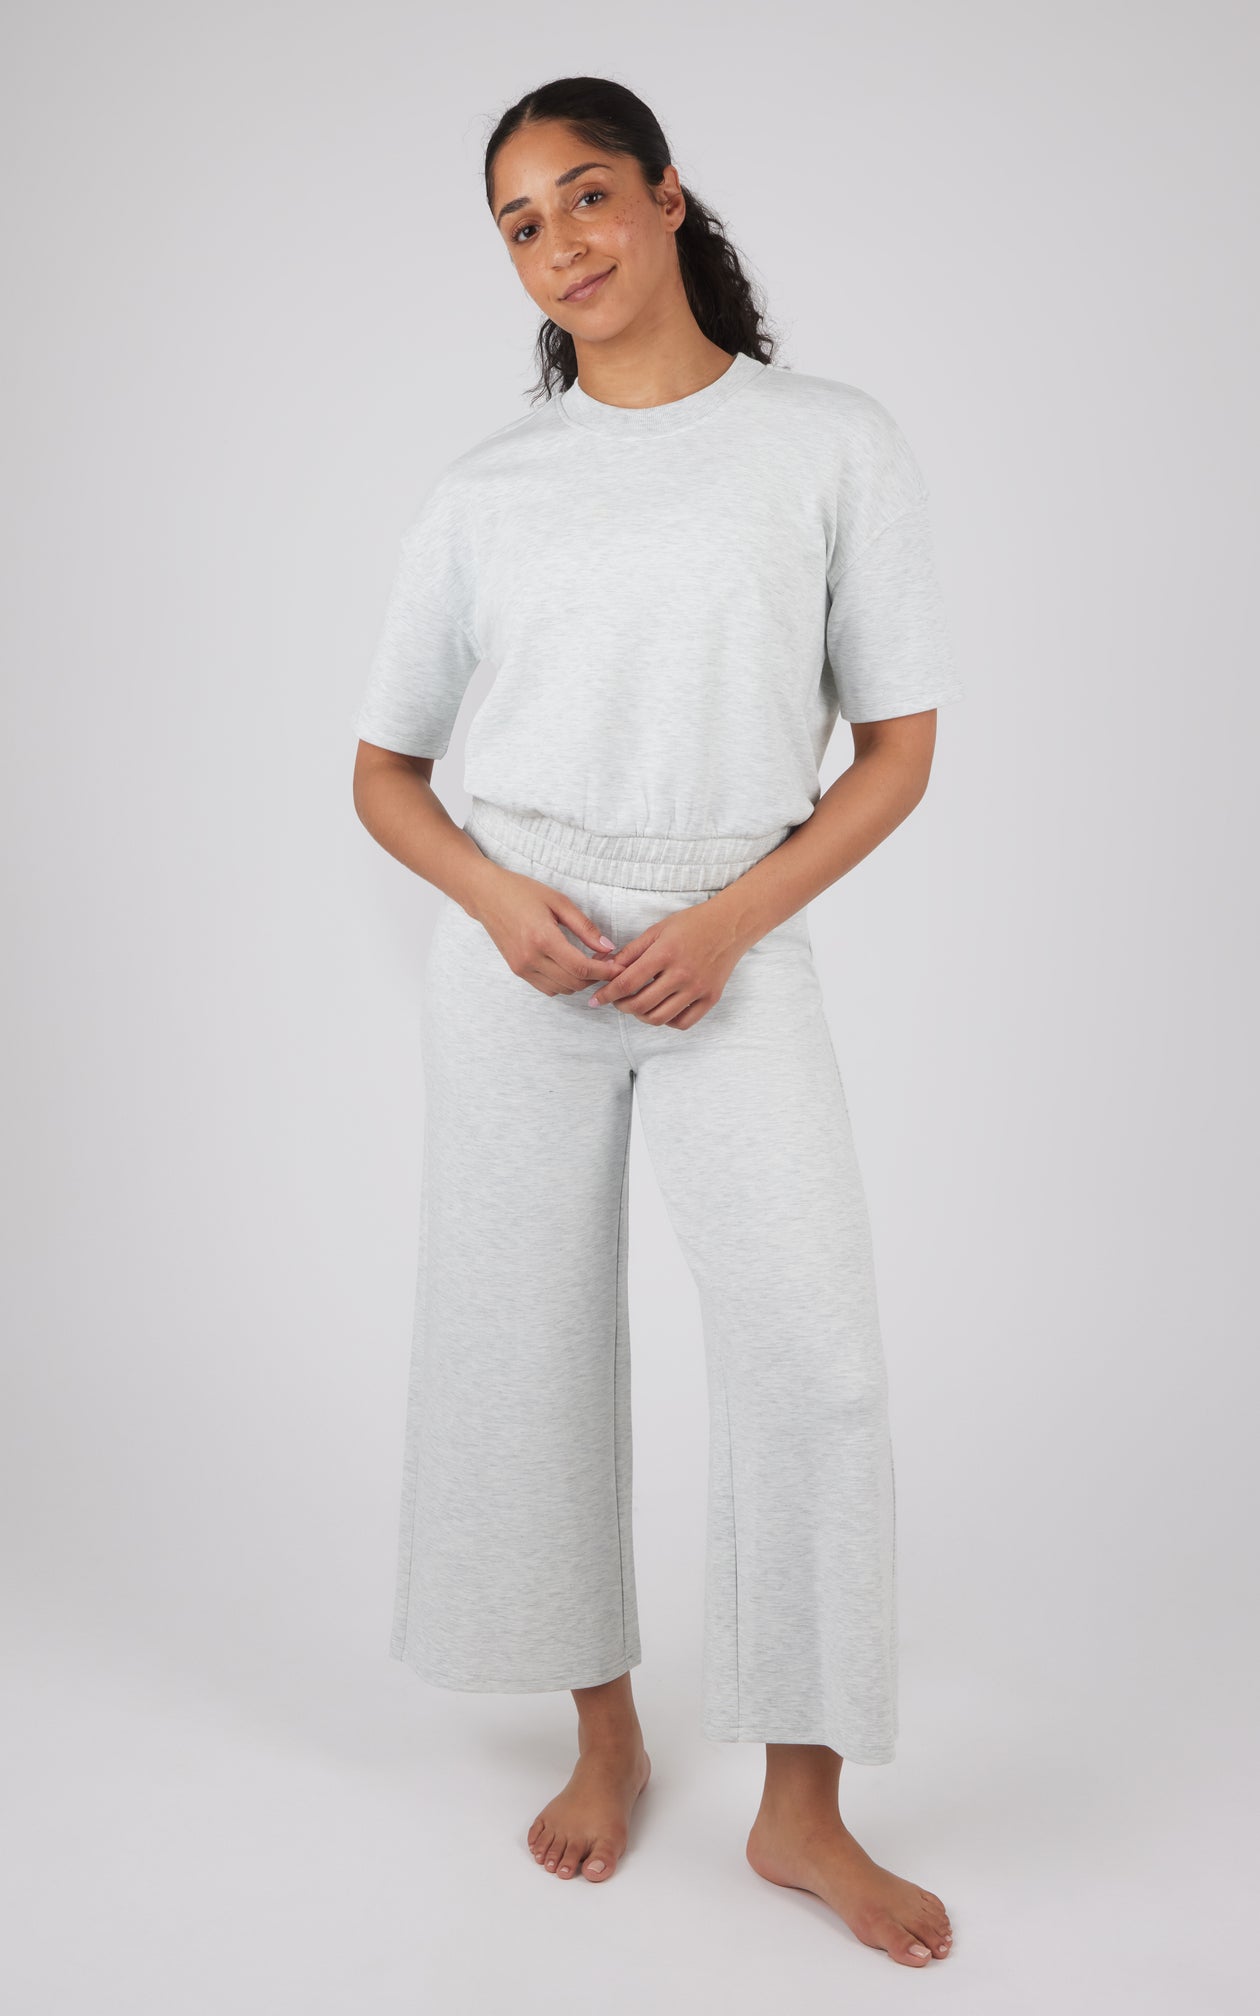 Scuba Lanston Short Sleeve Top and Scuba Lanston Culotte Pant - 1473SSCY –  90 Degree by Reflex